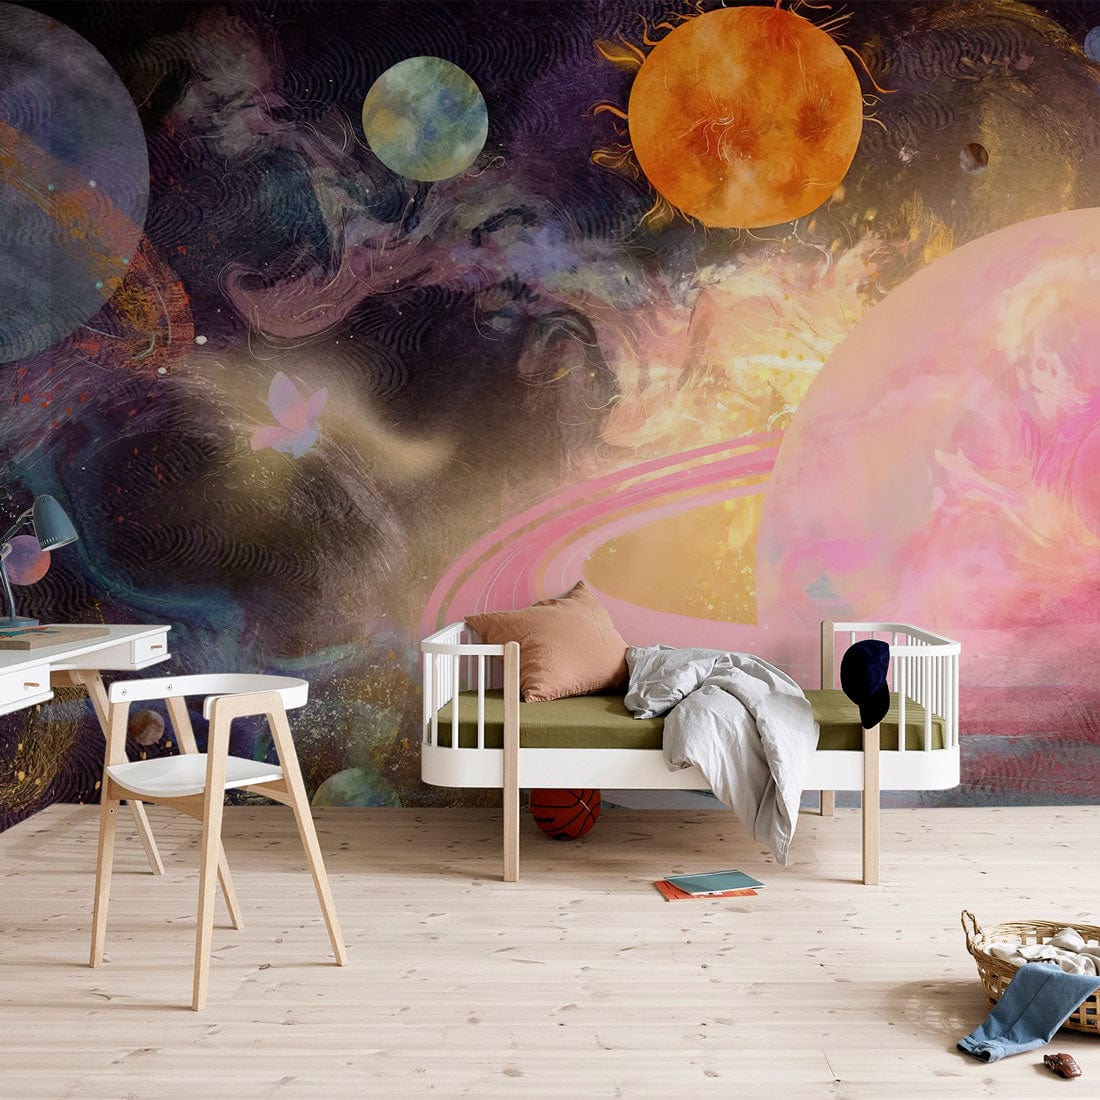 luminous planets wallpaper mural nursery decor idea